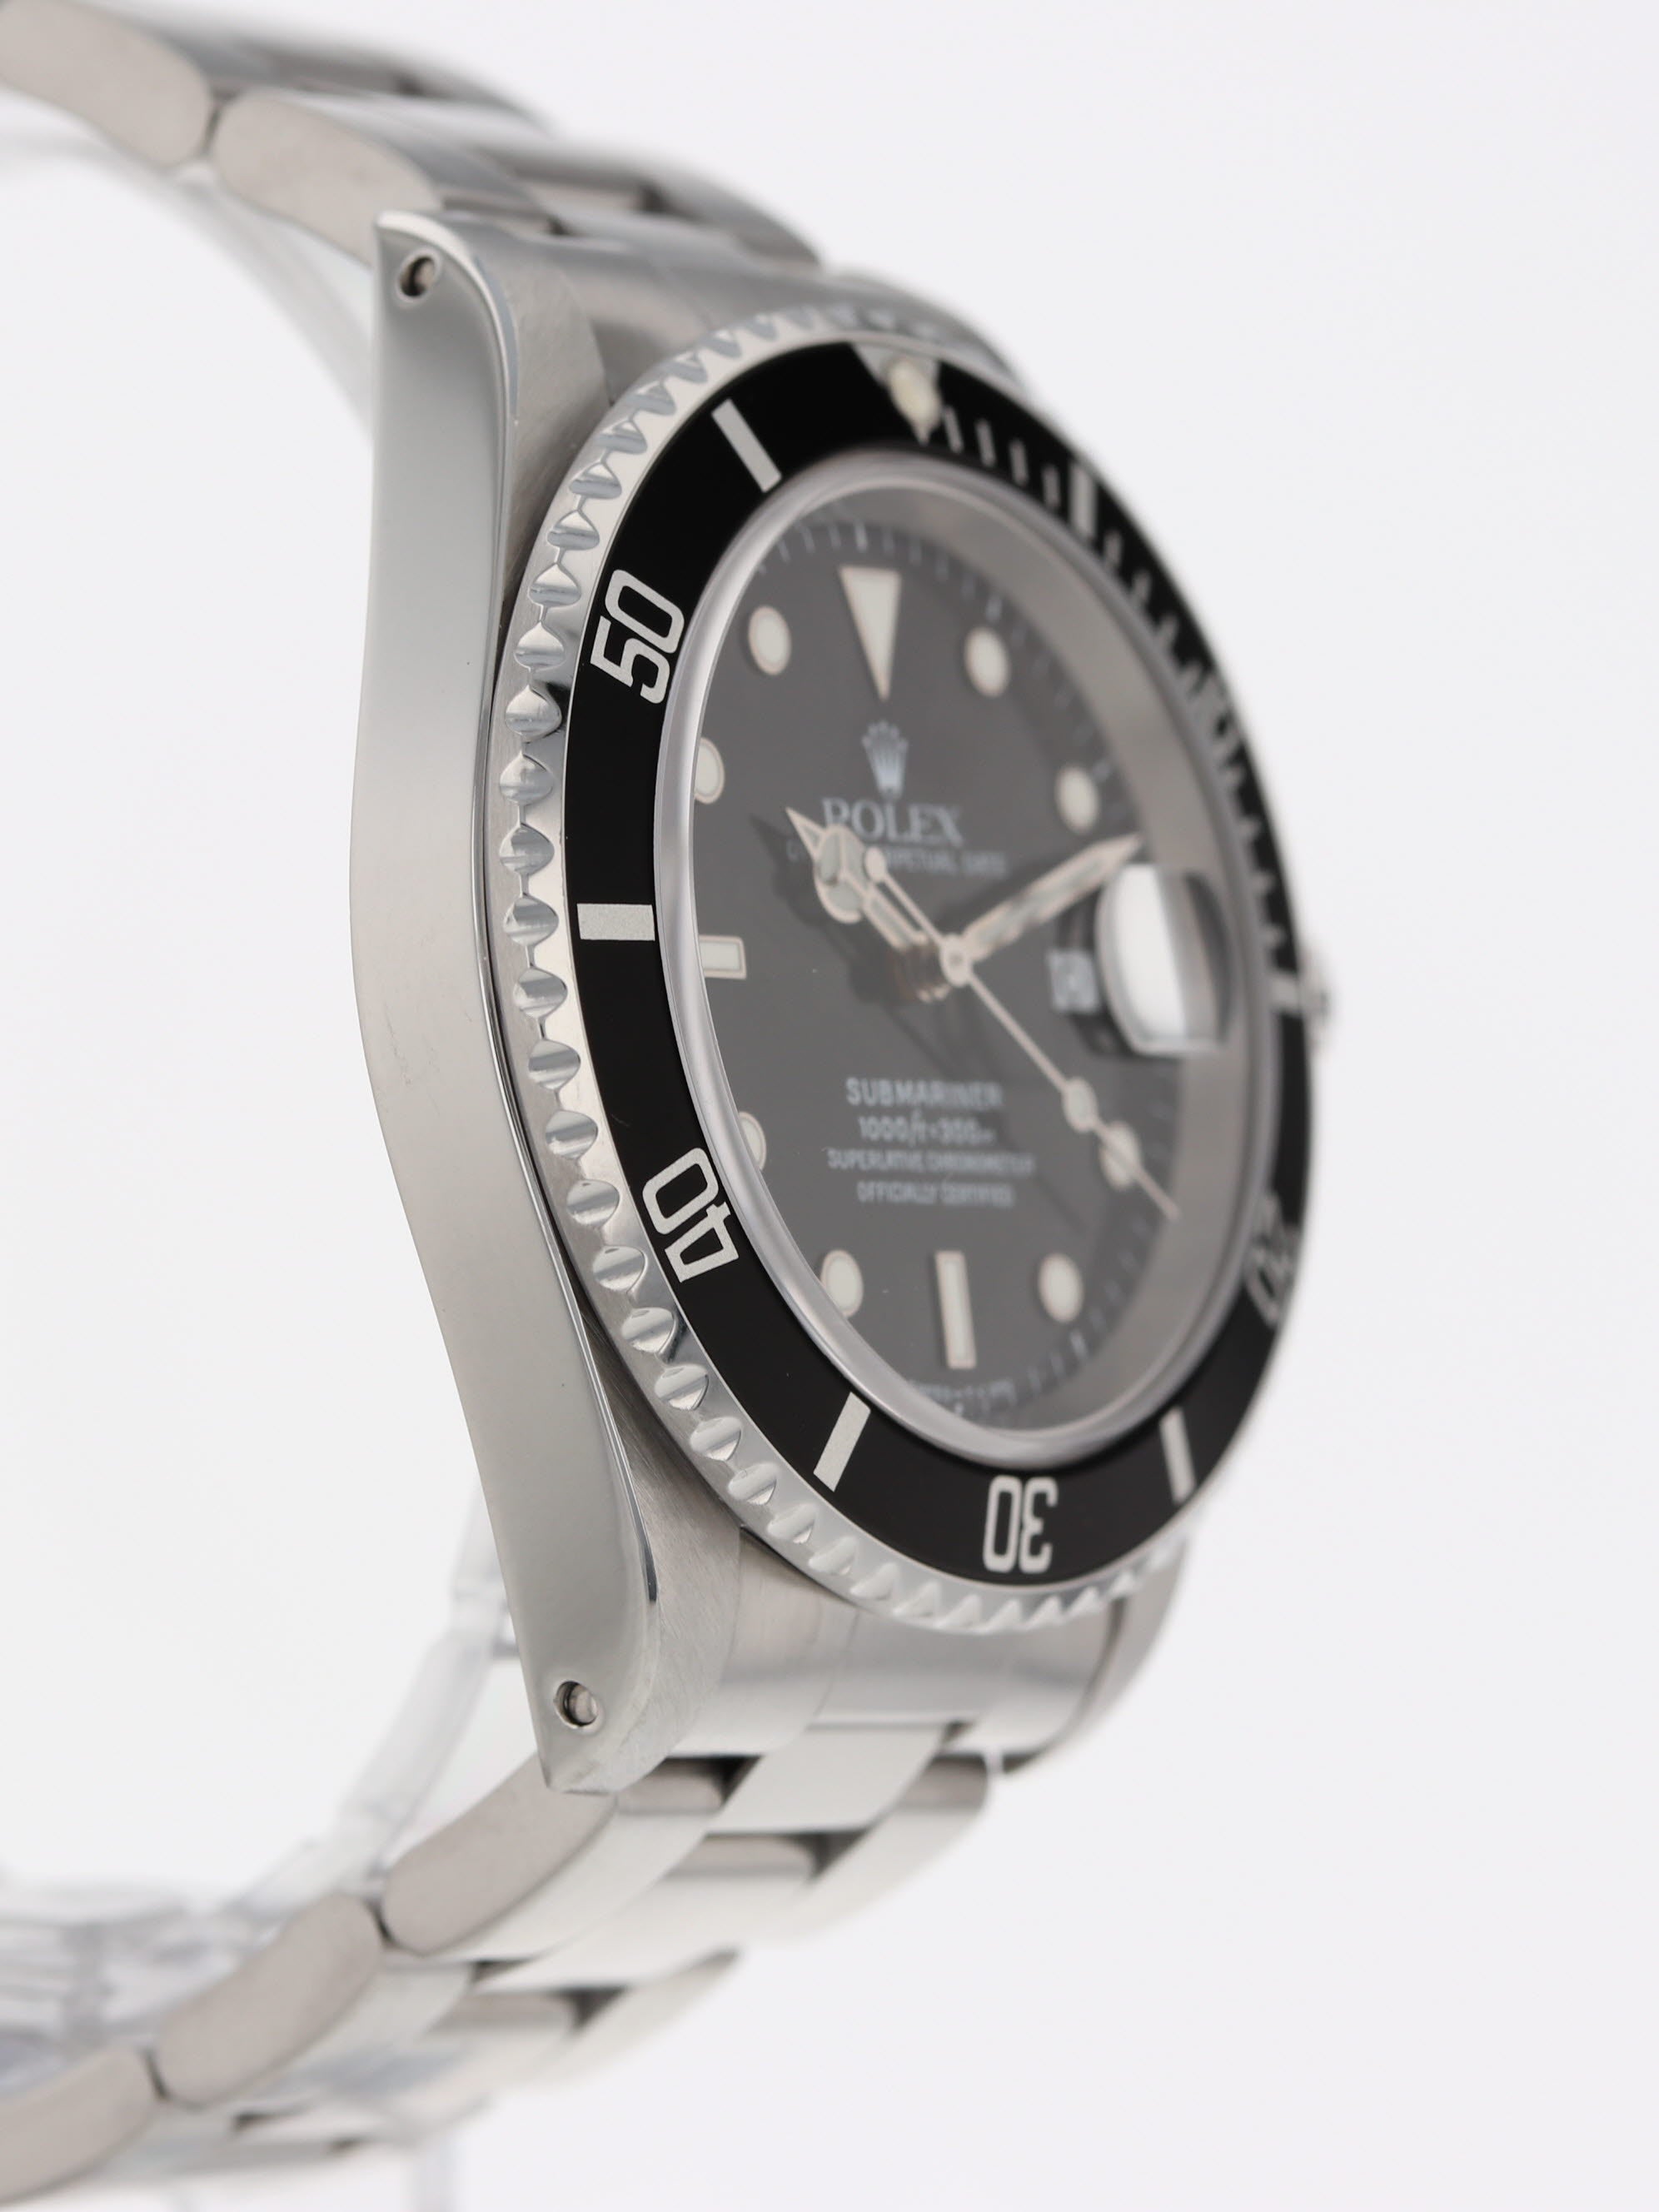 Bamford Submariner Watches, ref 16610, Sky-Blue Edition